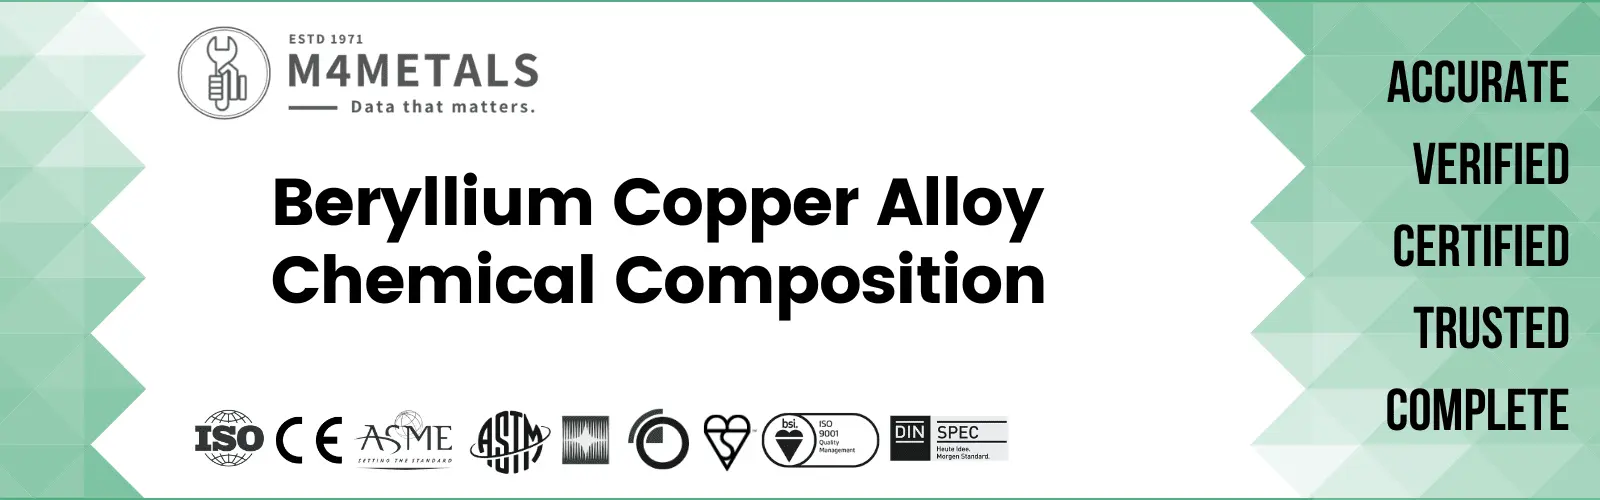 Beryllium Copper Chemical Composition